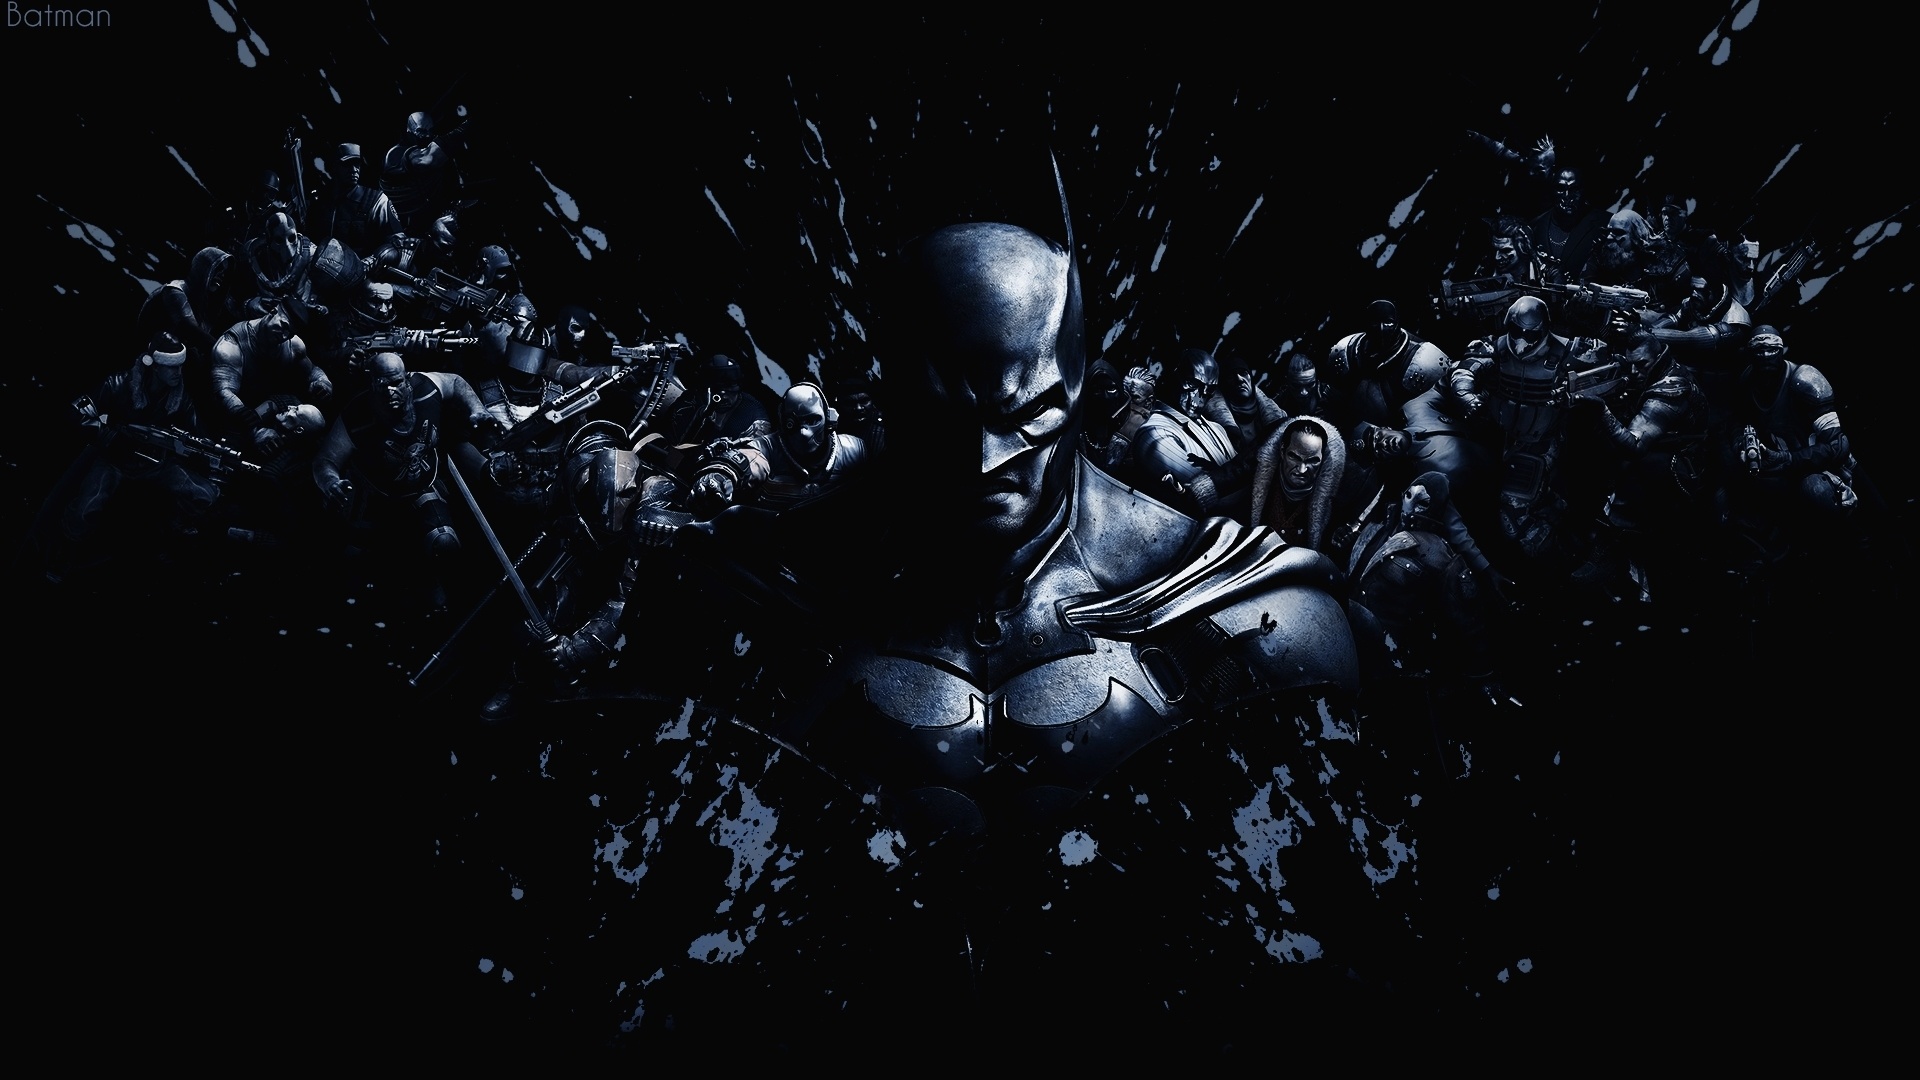 Download wallpaper 1920x1080 batman: arkham knight, batman, video game,  dark, art, full hd, hdtv, fhd, 1080p wallpaper, 1920x1080 hd background,  18118